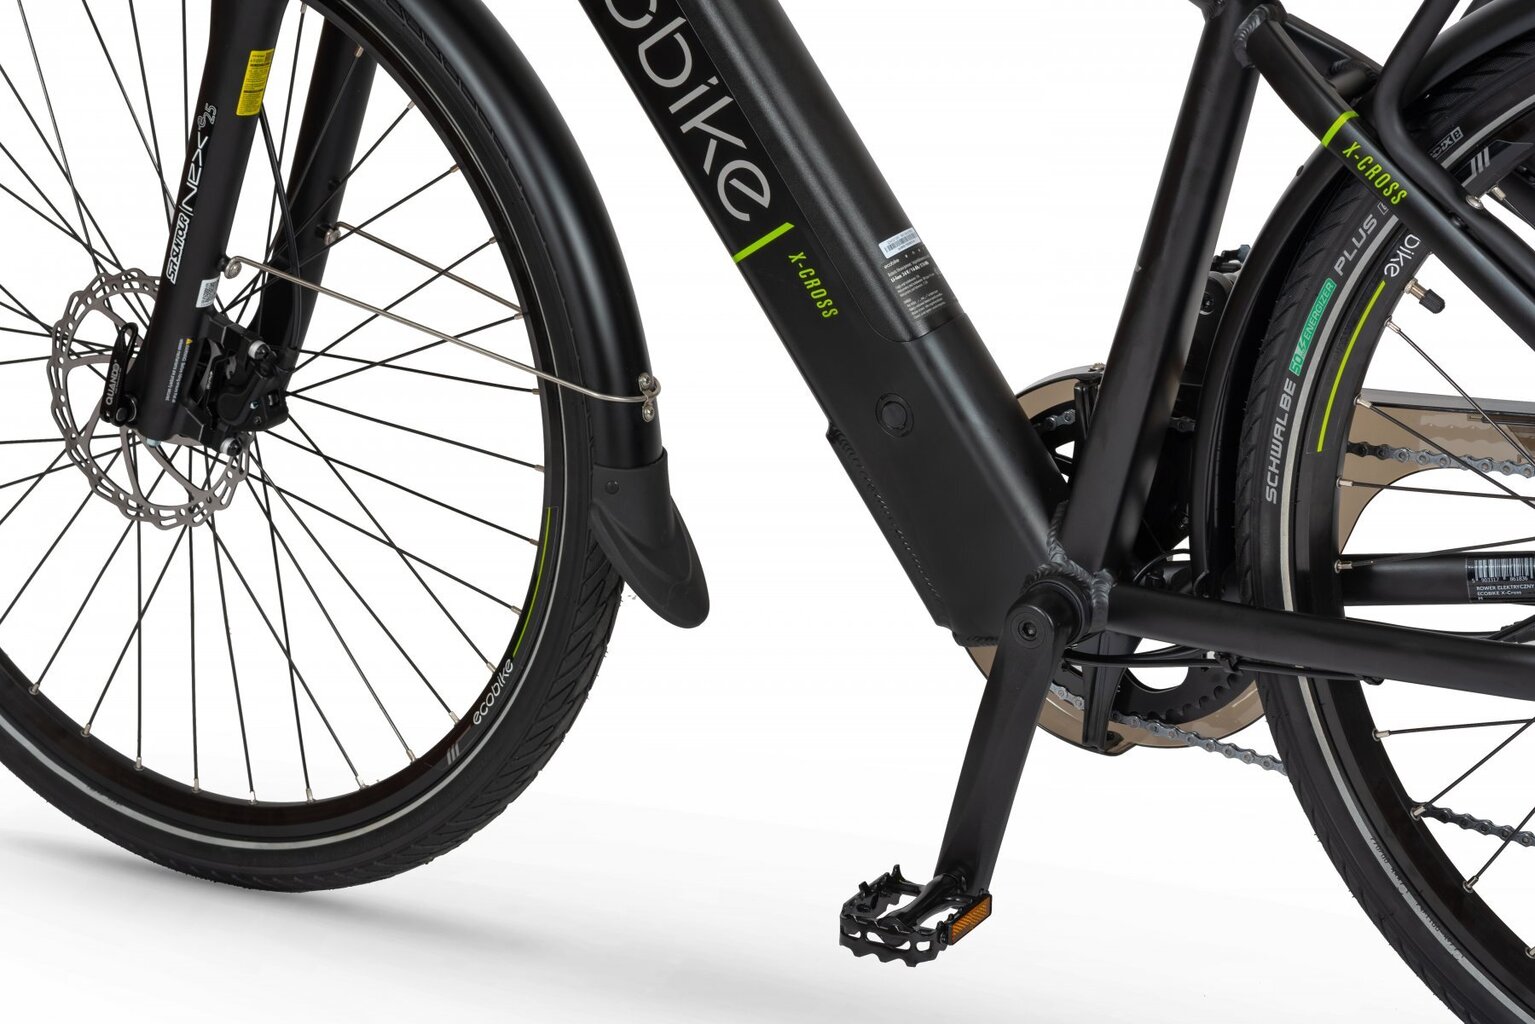 Elektriskais velosipēds Ecobike X-Cross M 17,5 Ah LG, melns cena un informācija | Elektrovelosipēdi | 220.lv